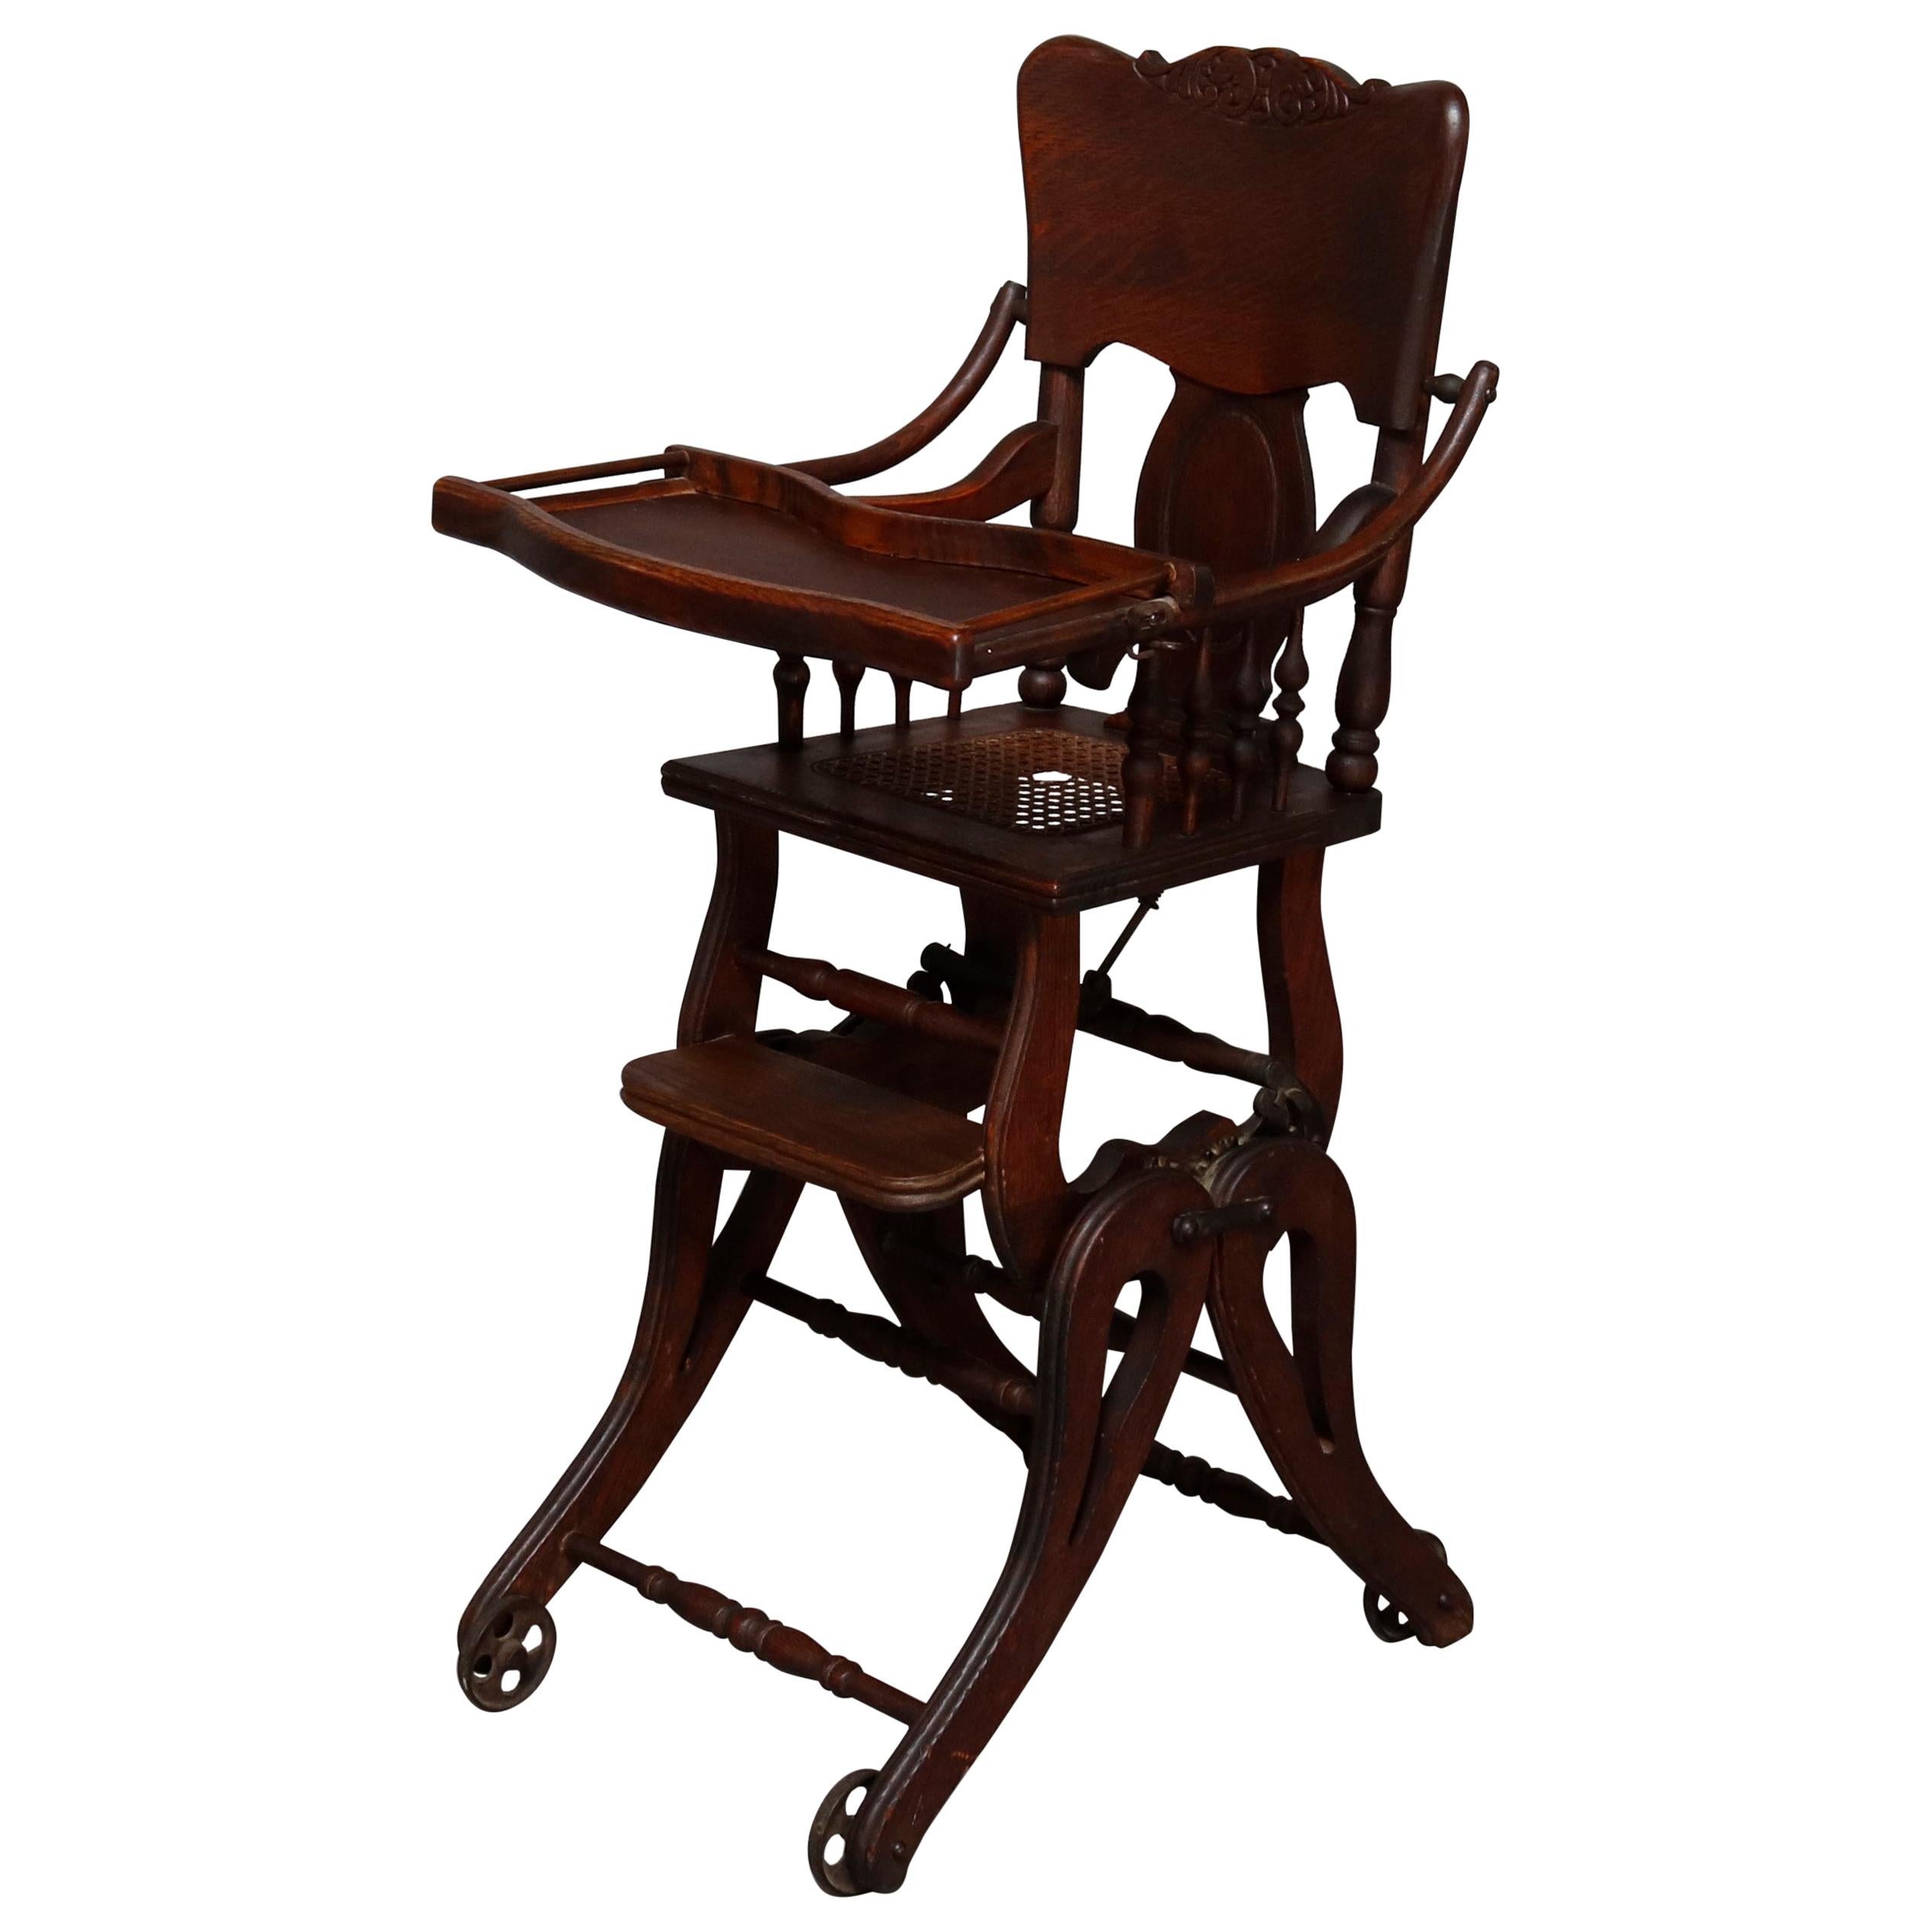 Antique Oak Pressed Carved Adjustable Conversion High Chair Rocker, circa 1910